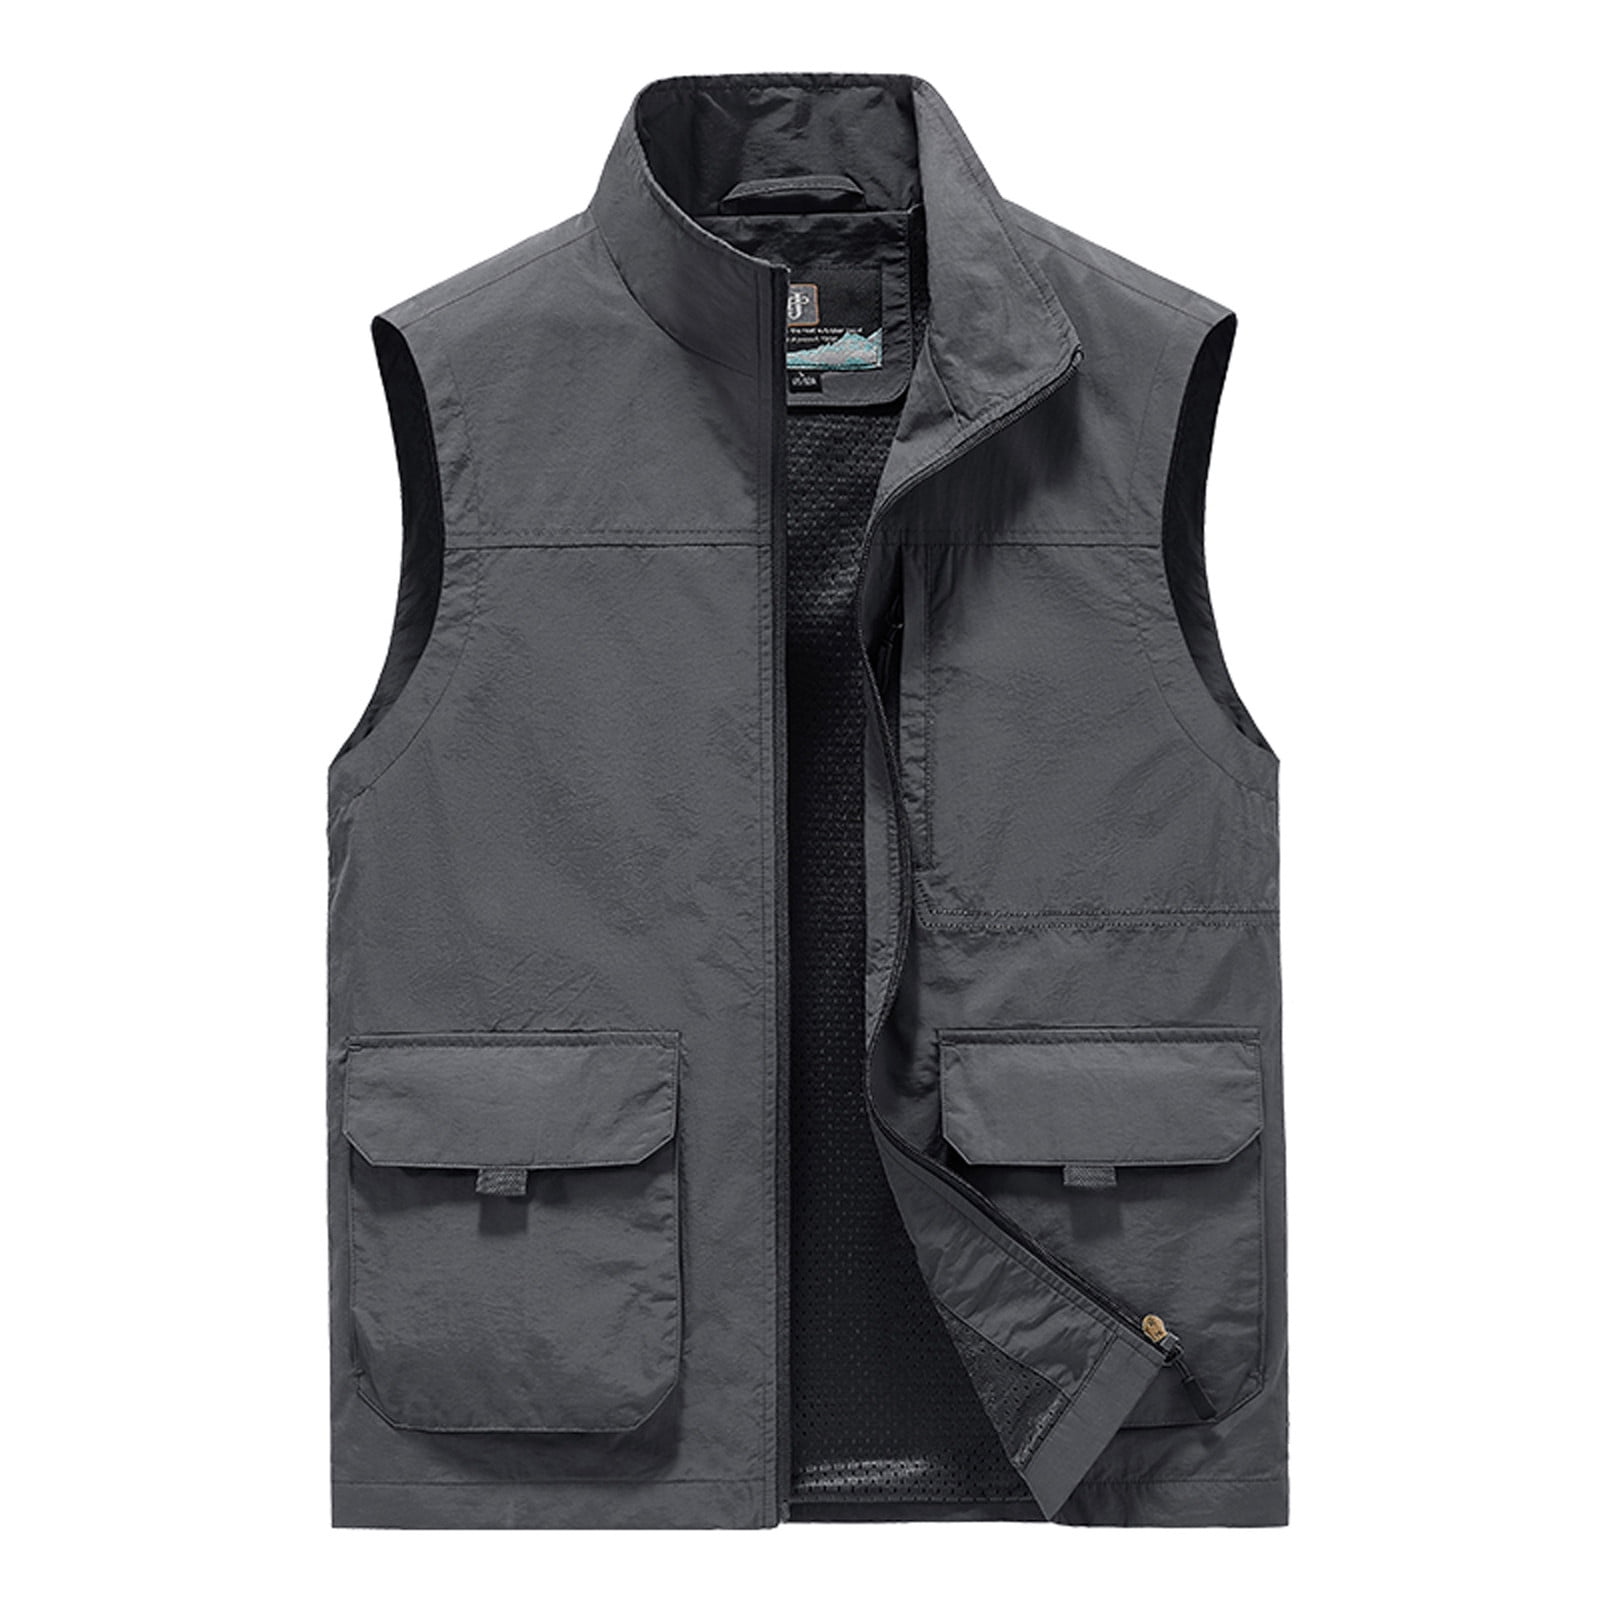 Men's Lightweight Softshell Vest, Windproof Sleeveless Jacket for ...